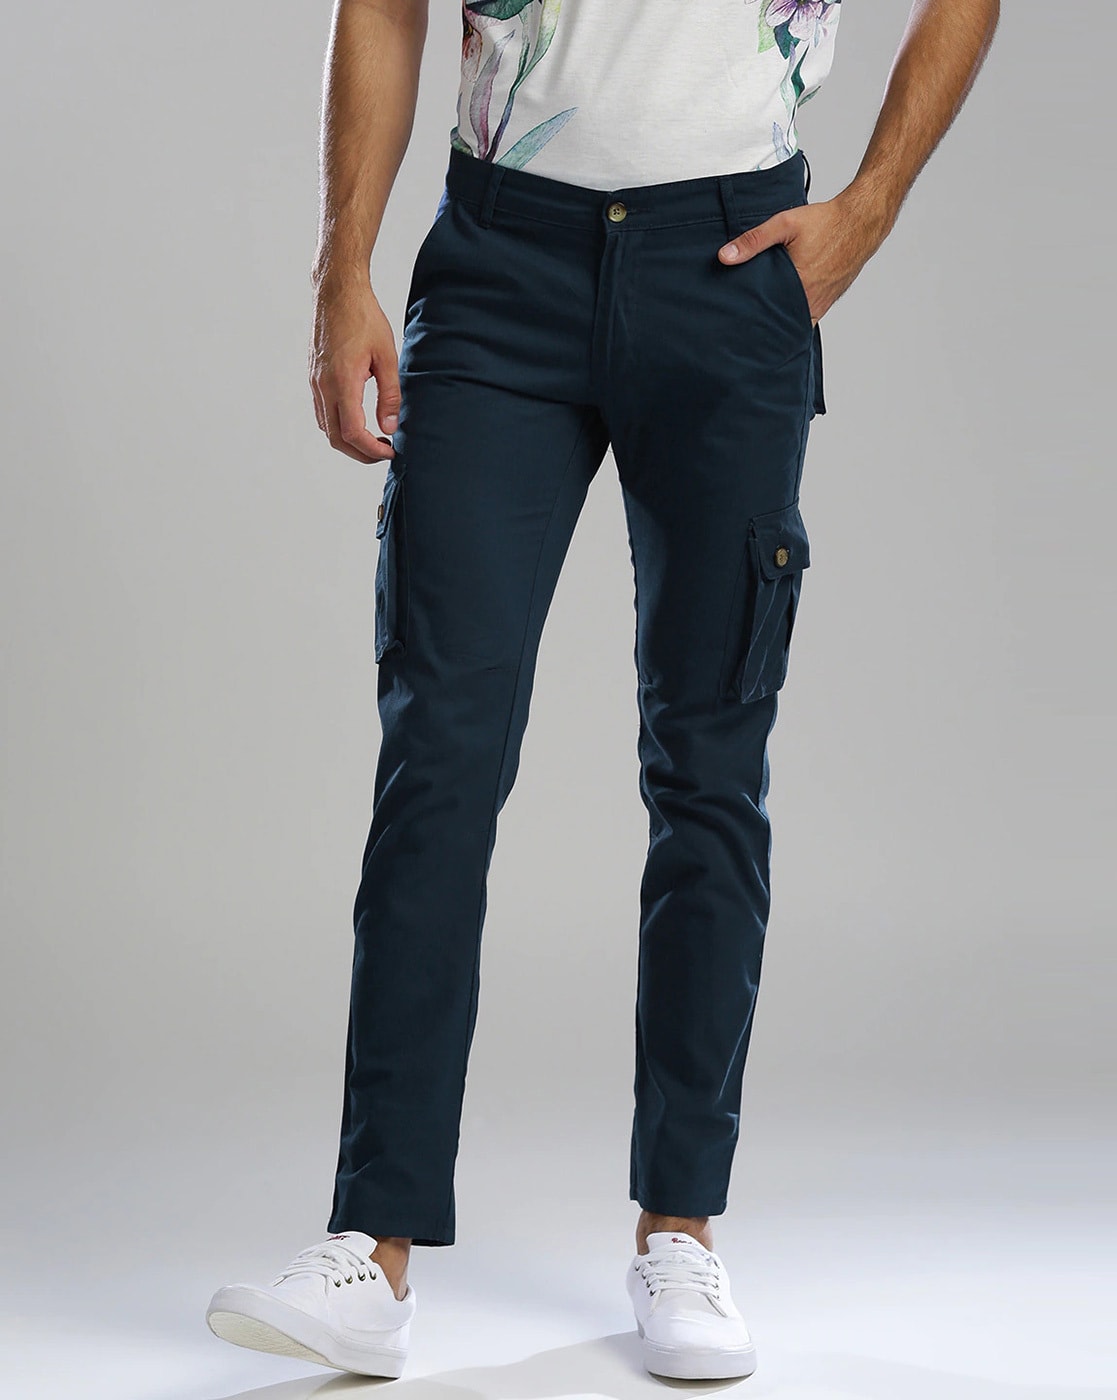 Mens Fashion Skinny Jeans Denim Pant with Pockets Cargo Combat Denim Jeans Pants  Slim Fit Motorcycle Jeans Biker Jogger Jeans | Wish